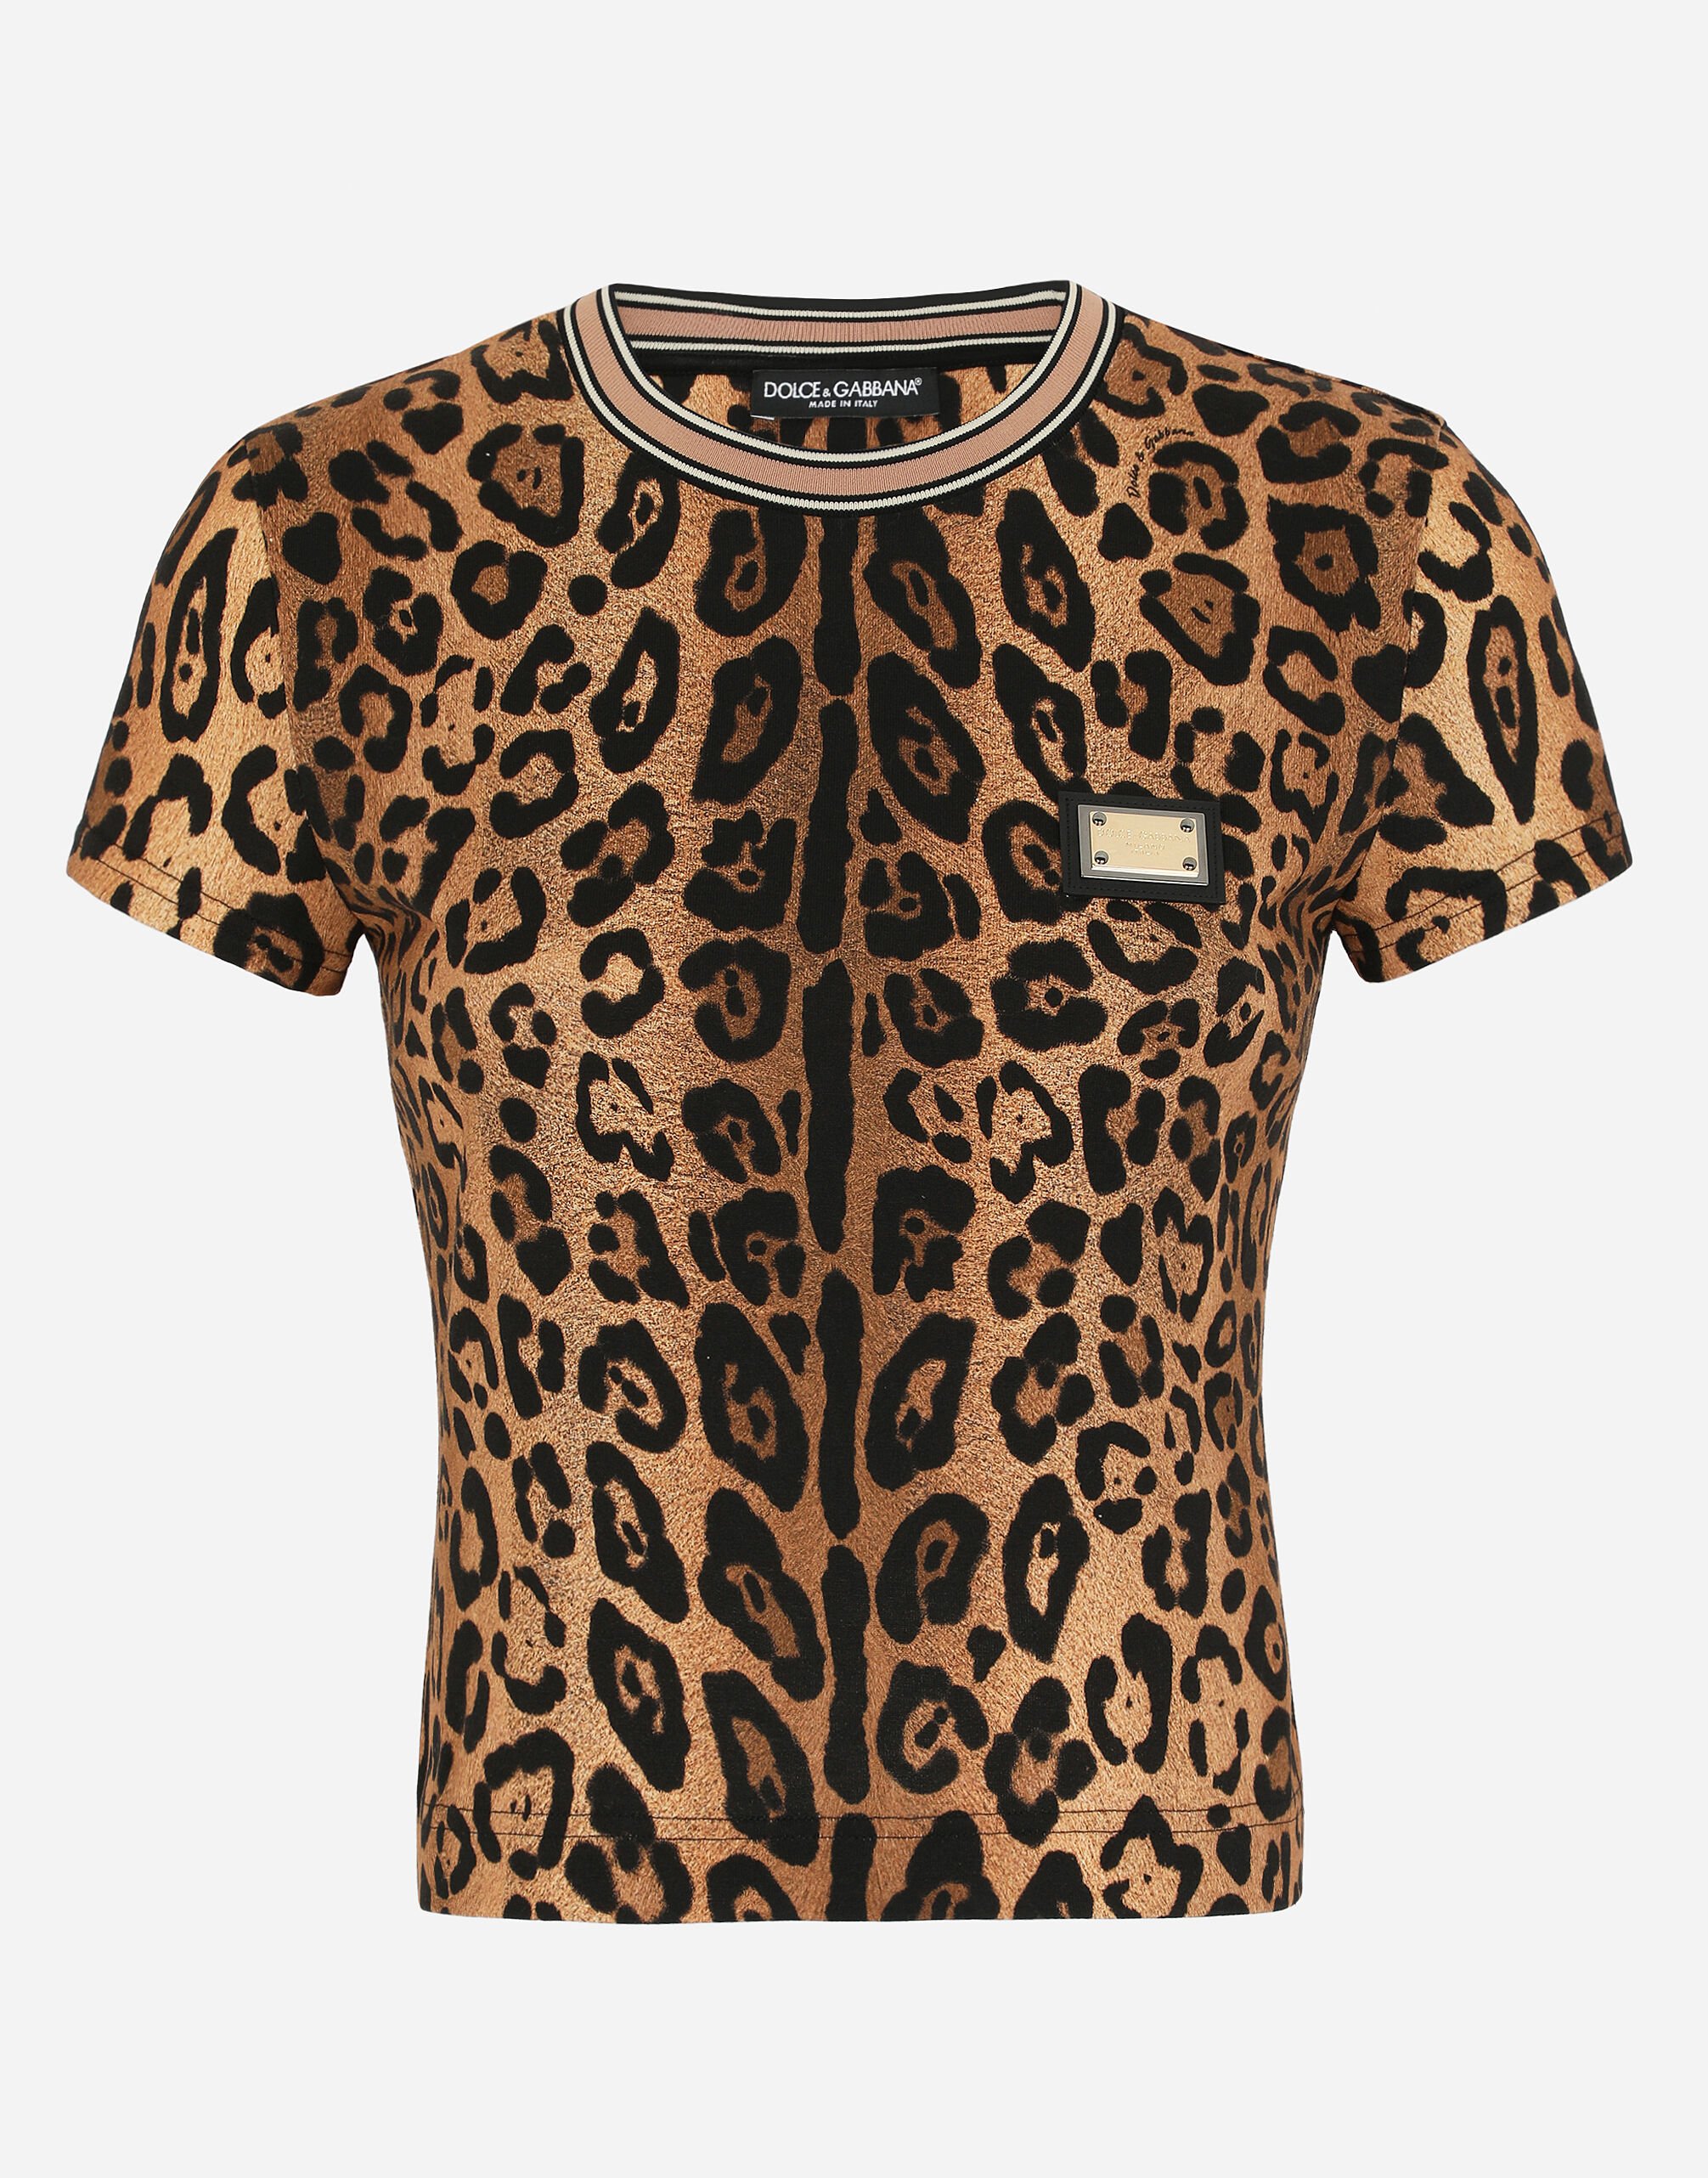 Dolce & Gabbana Short-sleeved leopard-print Crespo T-shirt Print FXT02TJAHJZ